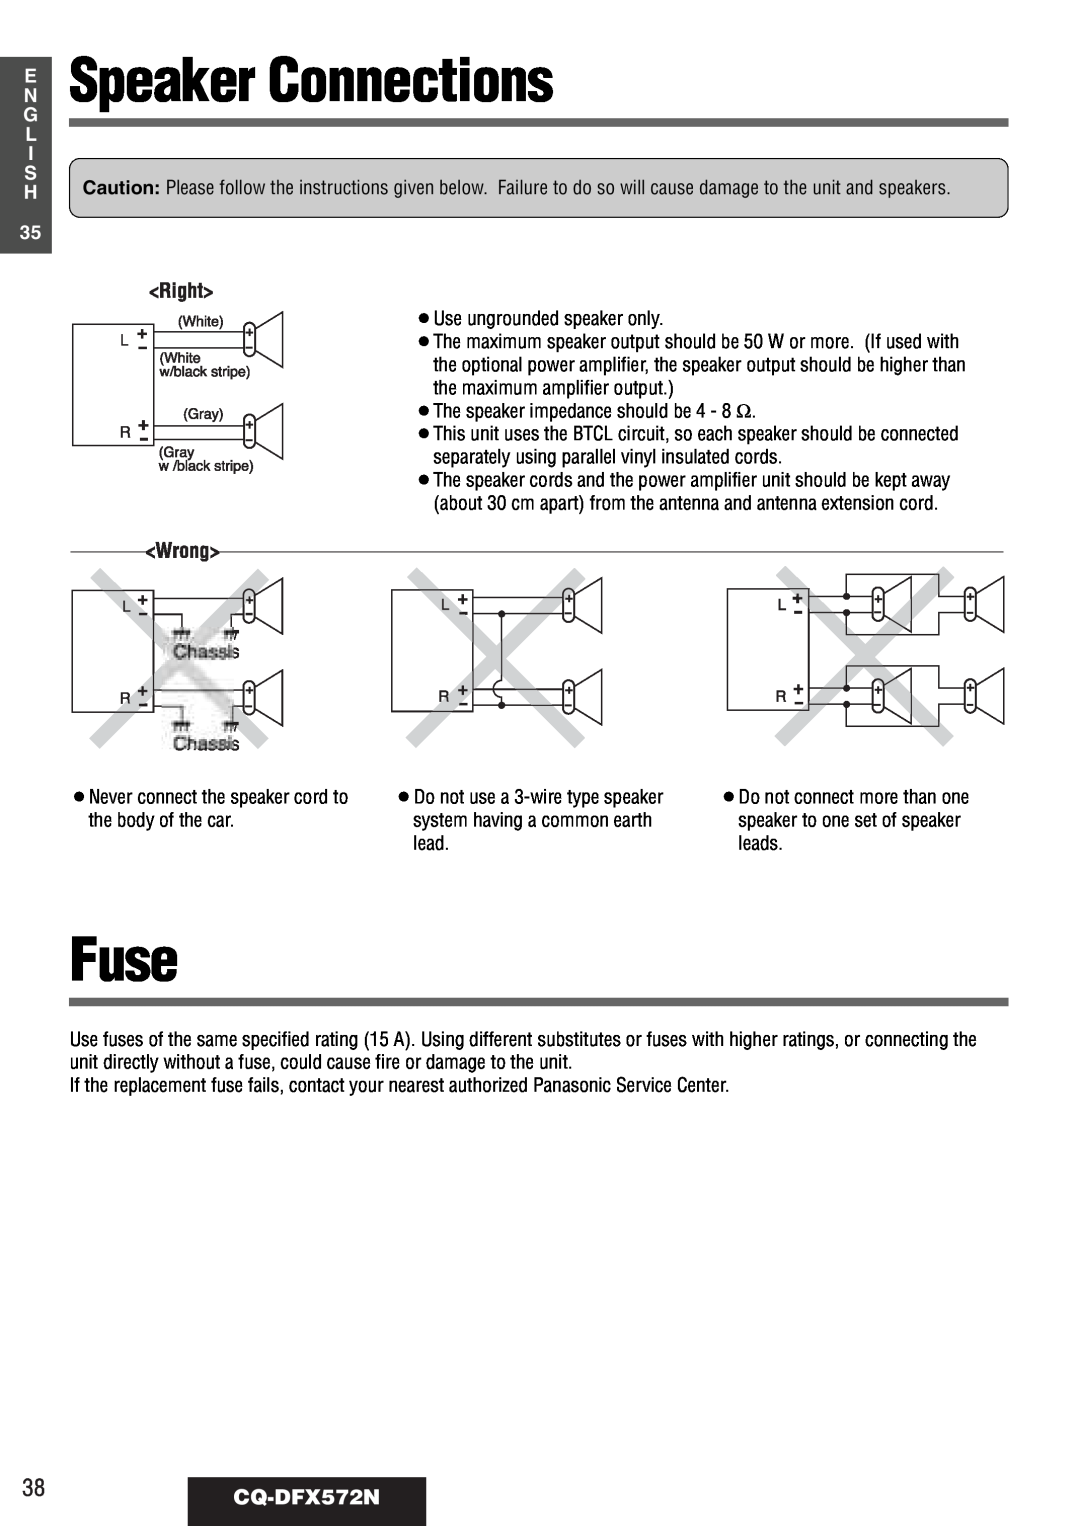 Panasonic operating instructions Speaker Connections, Fuse, 38CQ-DFX572N, E N G L I S H 